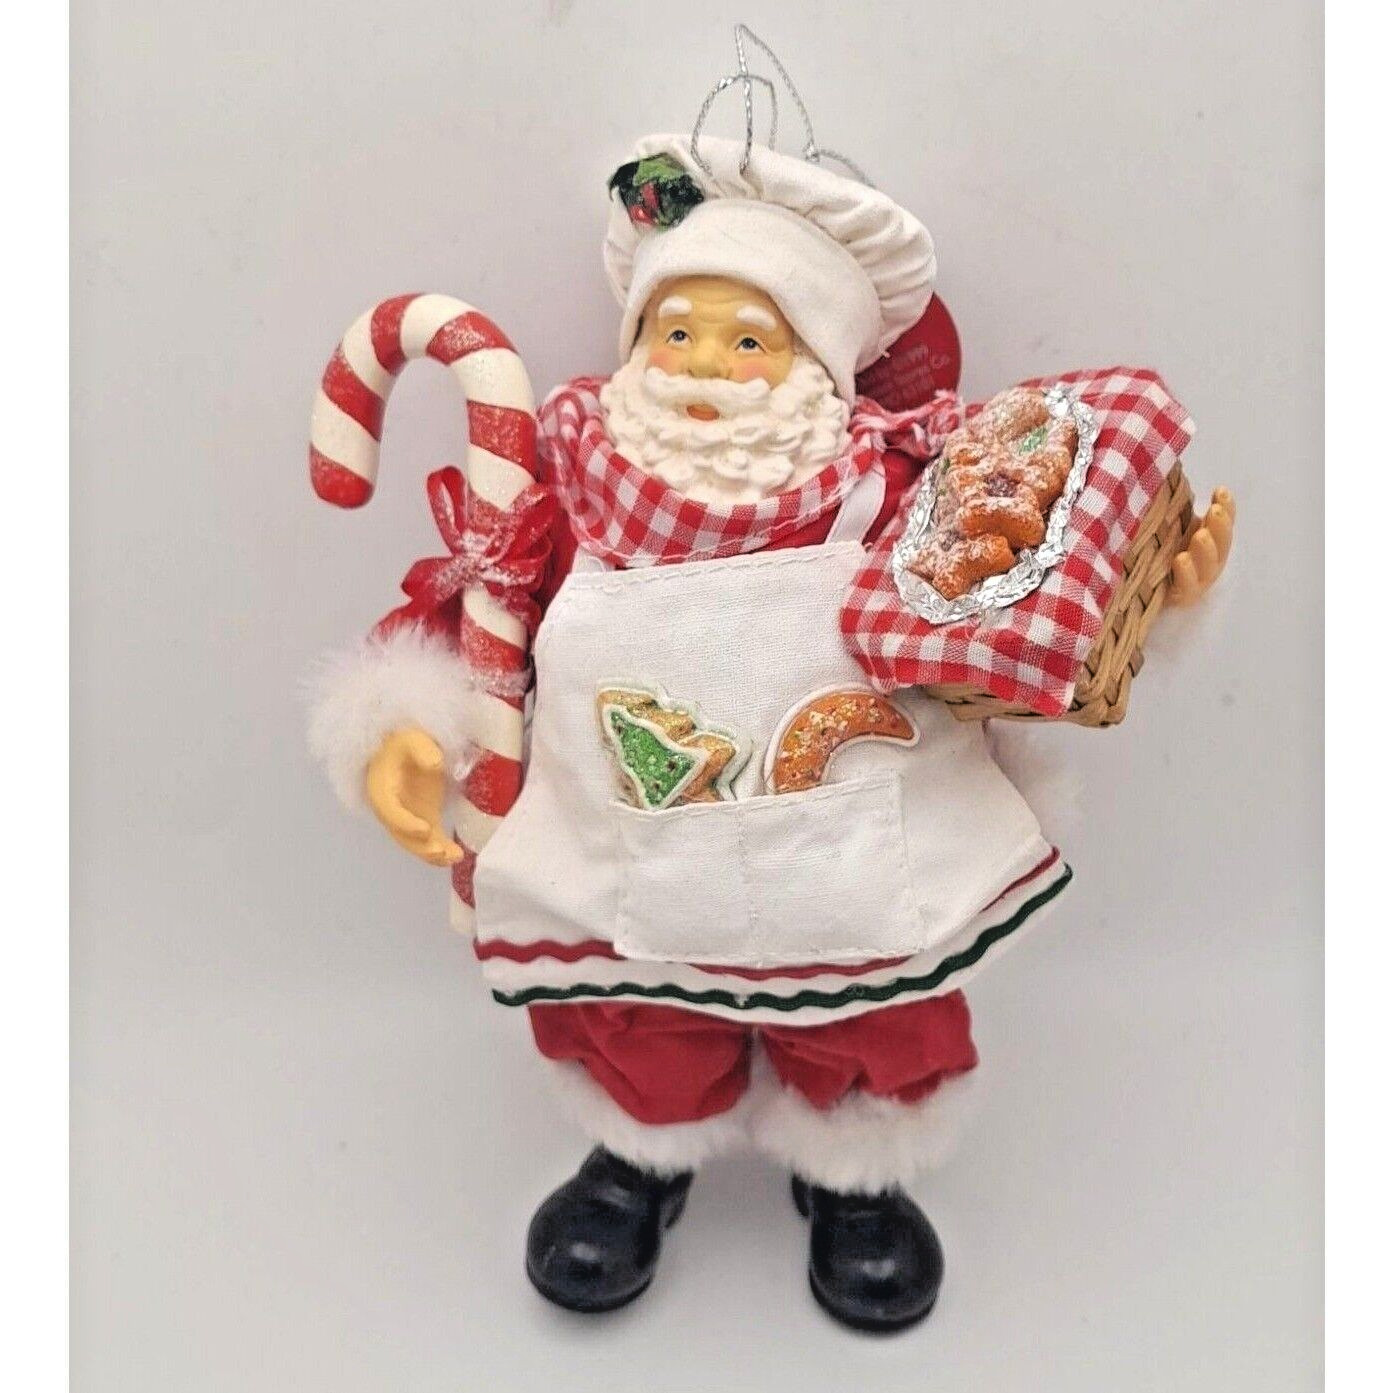 Chef Santa Claus Baker Christmas Ornament Figurine Home for the Holidays VTG